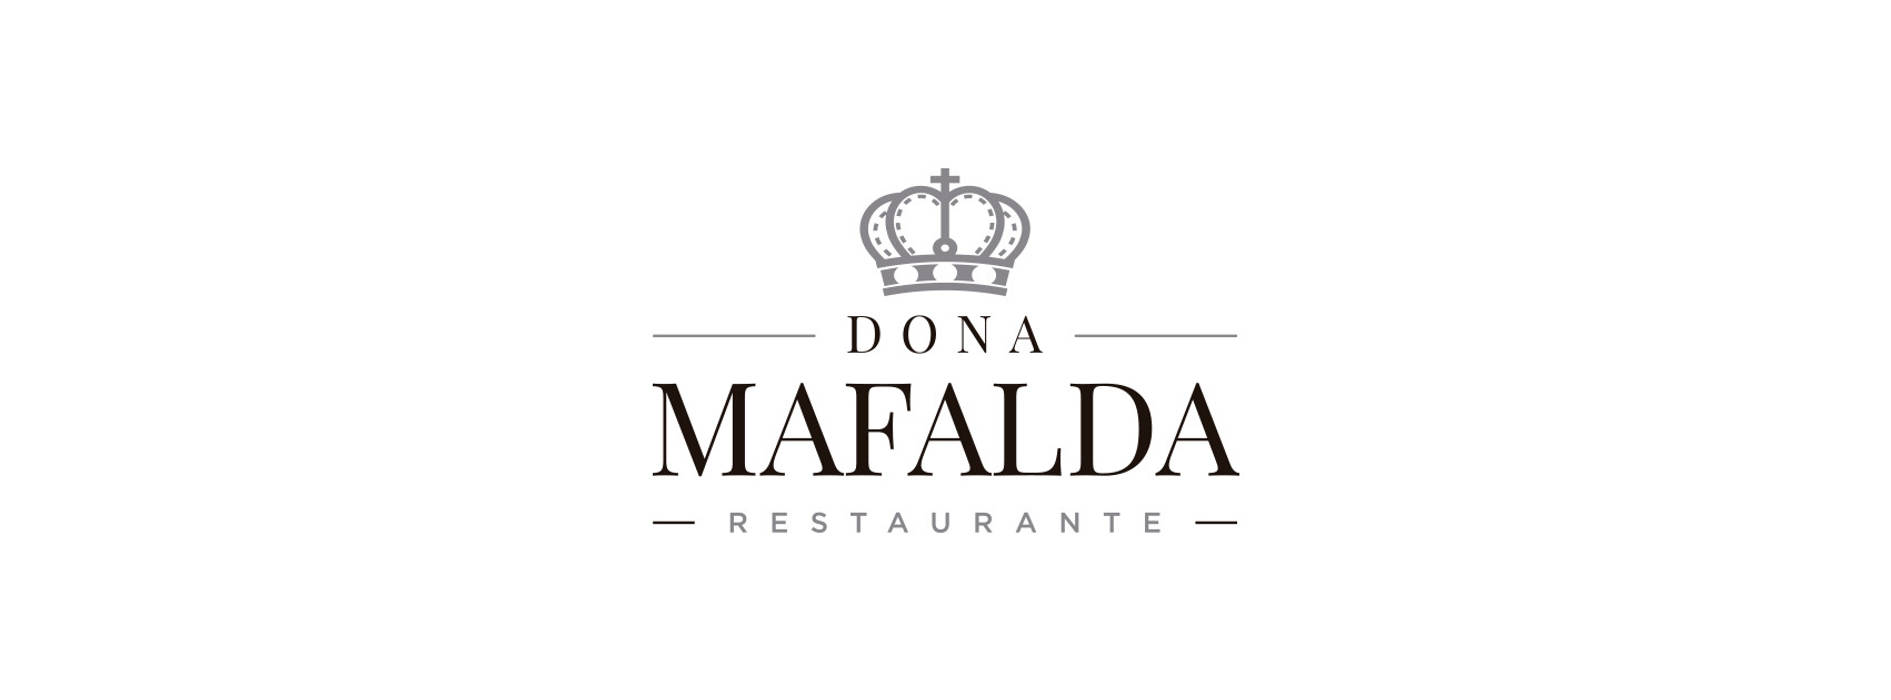 Dona Mafalda - Restaurante, Miguel Zarcos Palma Miguel Zarcos Palma Комерційні приміщення Гастрономія